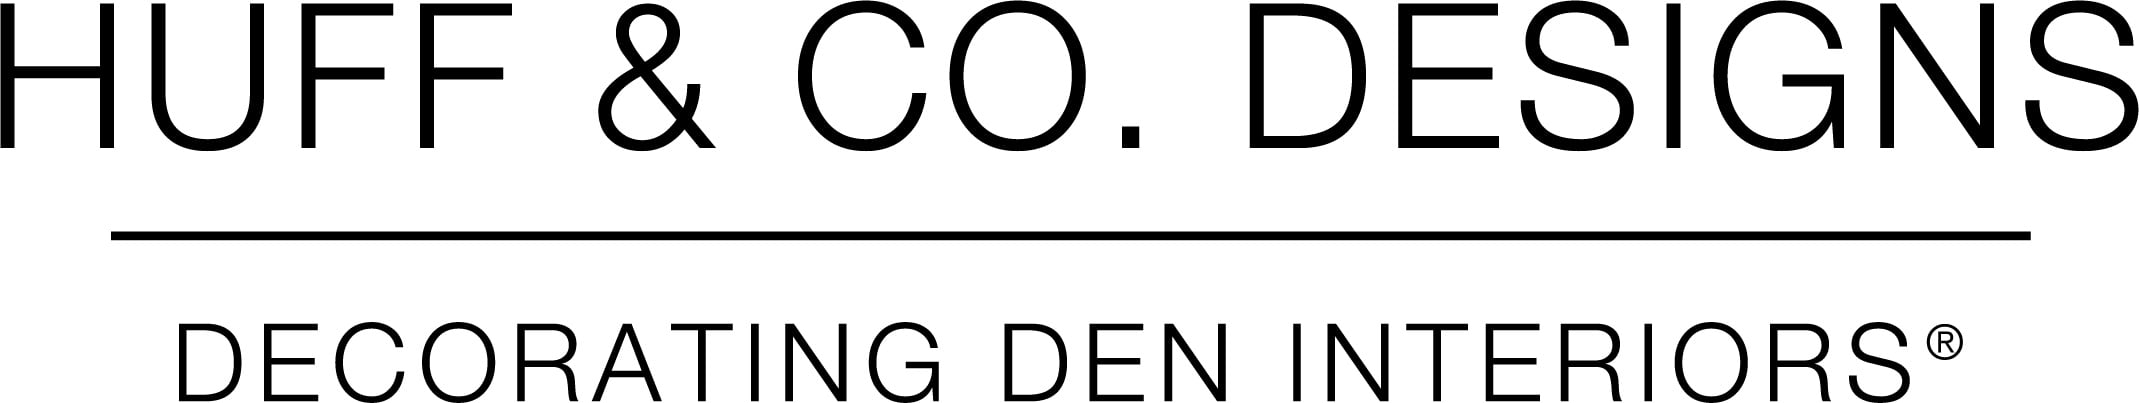 Decorating Den Interiors Logo